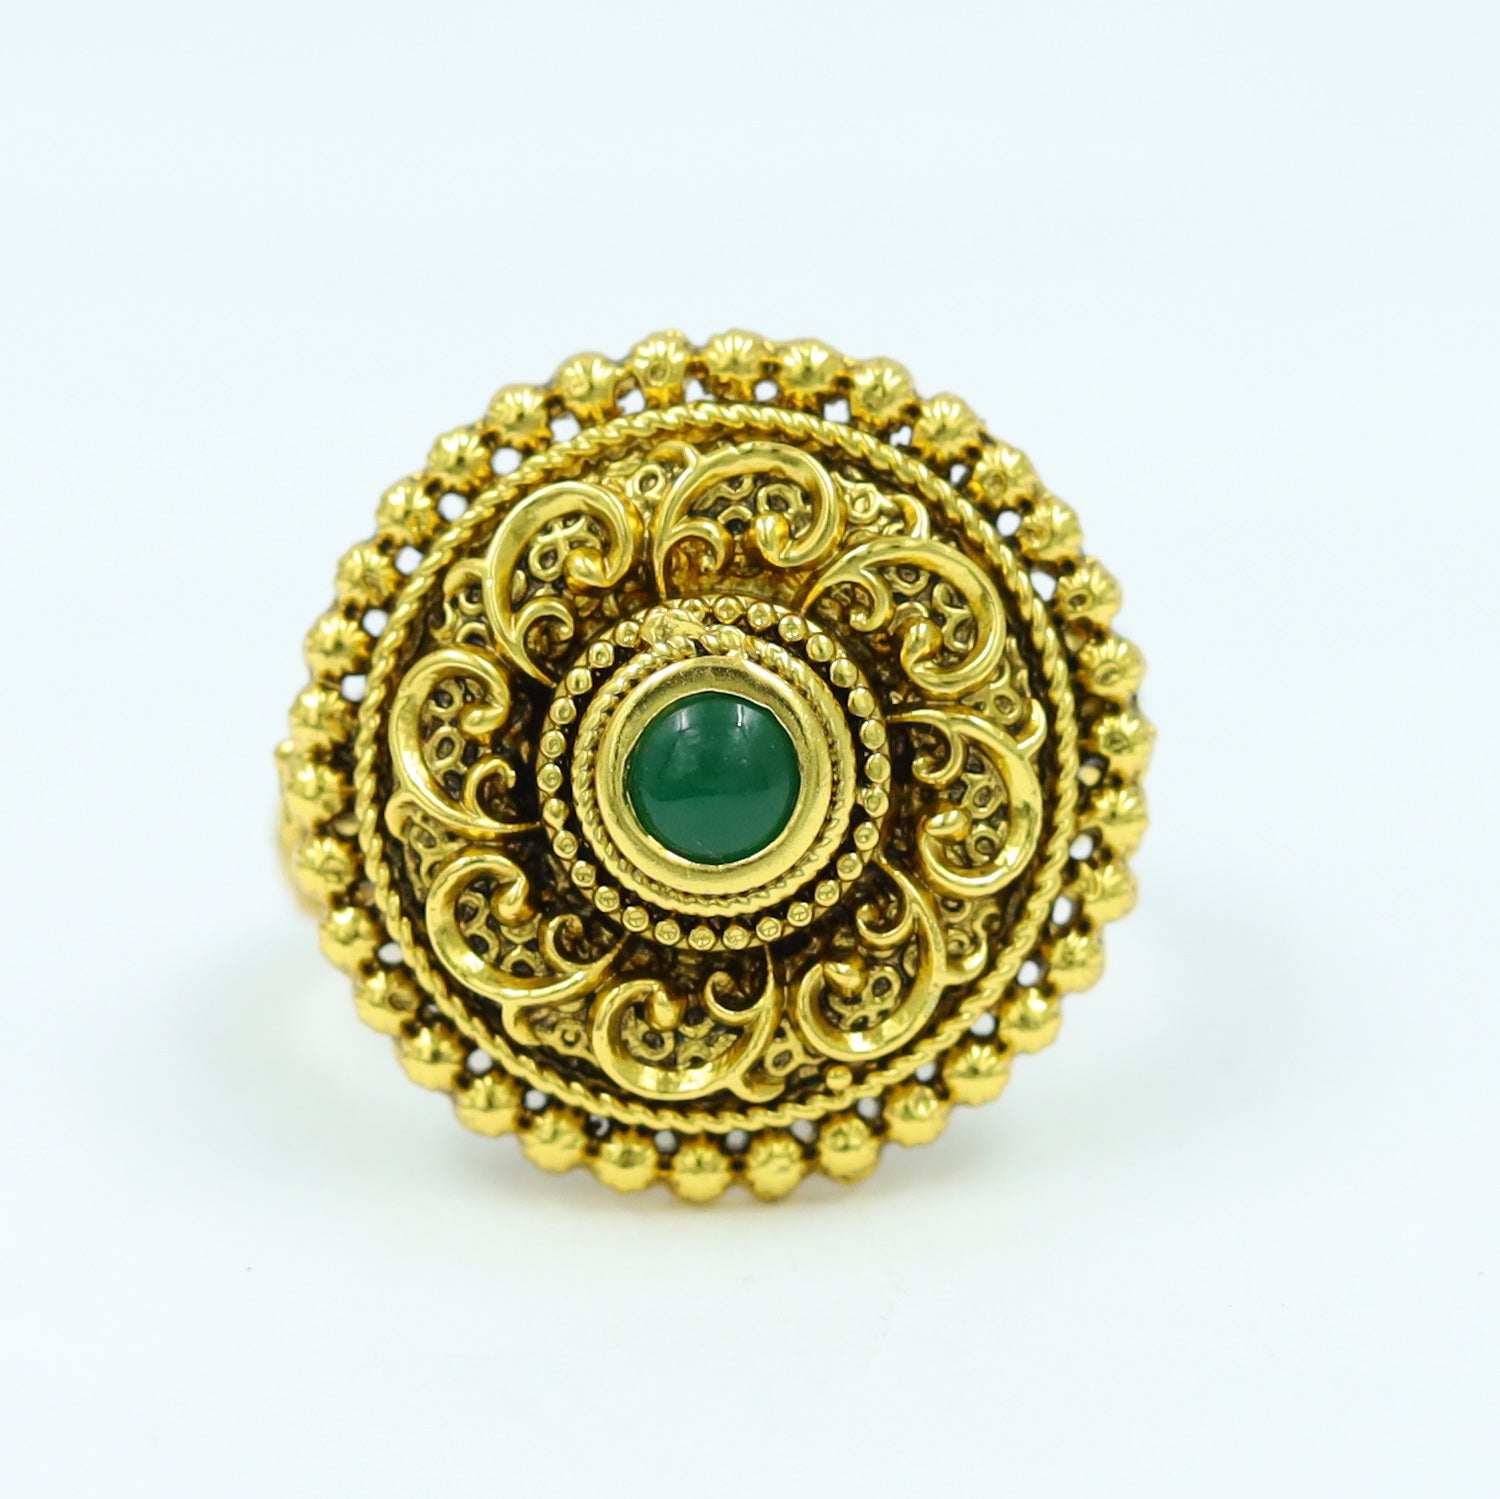 Antique Gold Finish Ring 12235-28